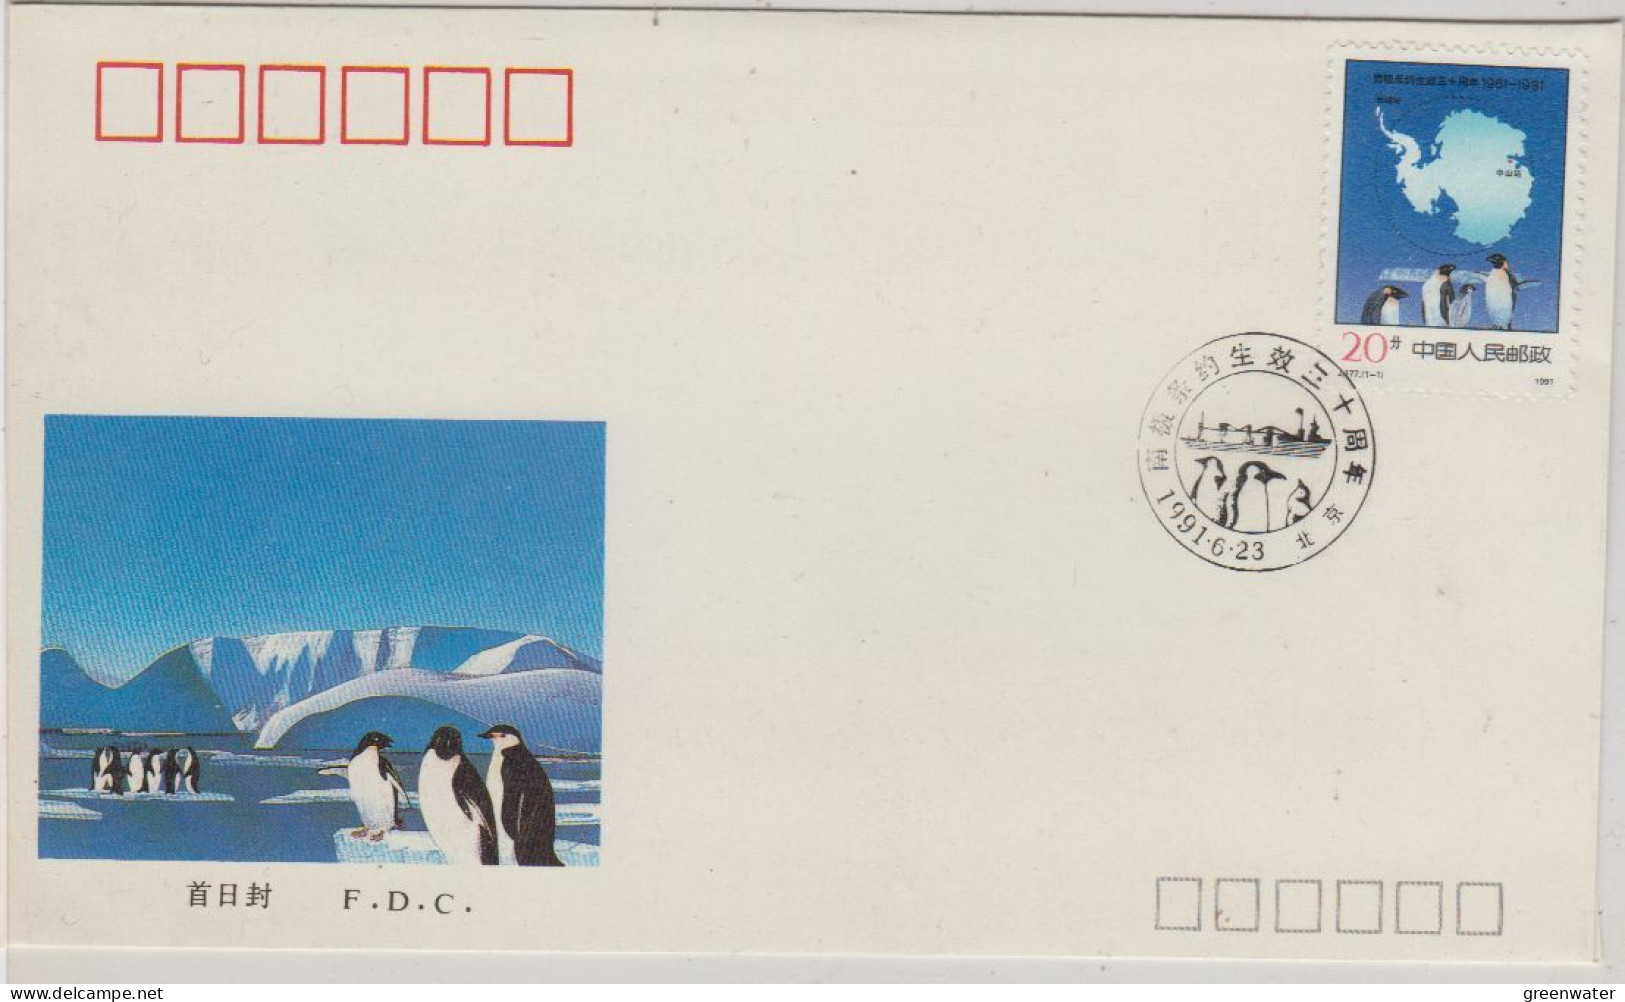 China 1991 Antarctica 1v FDC (59570) - 1990-1999